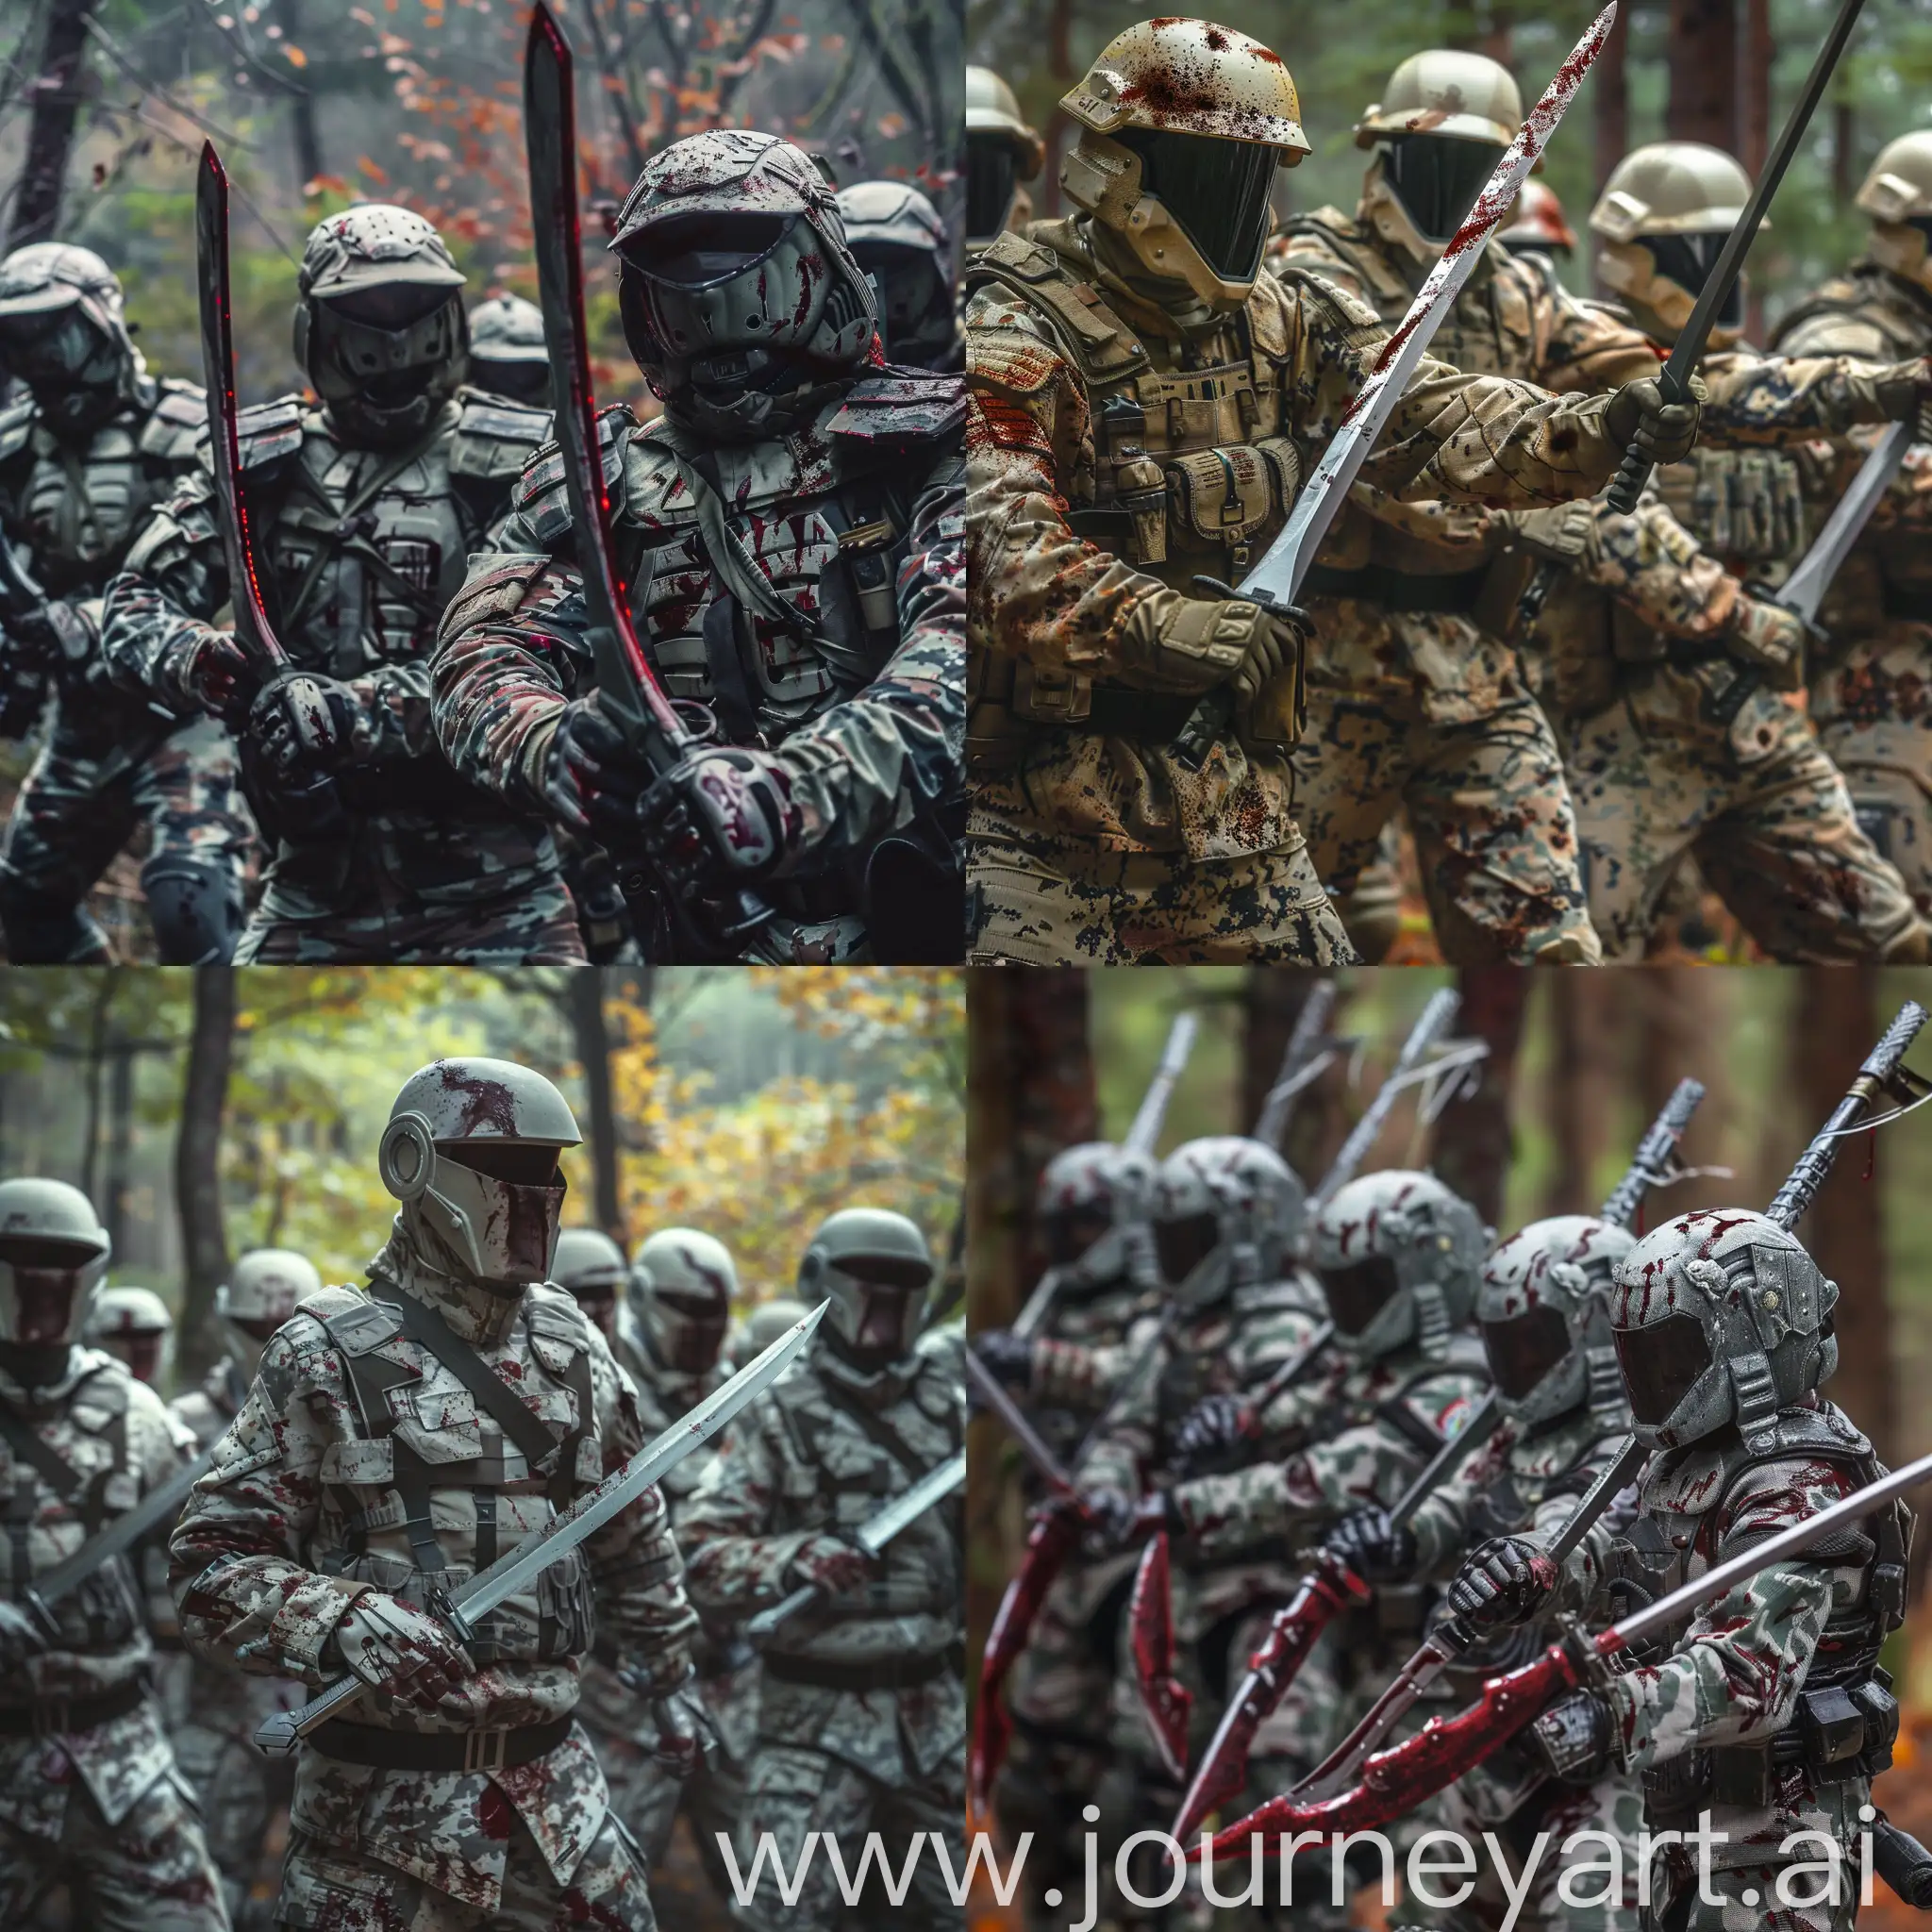 Futuristic-Sardaukar-Mercenaries-in-BattleReady-Forest-Ambush